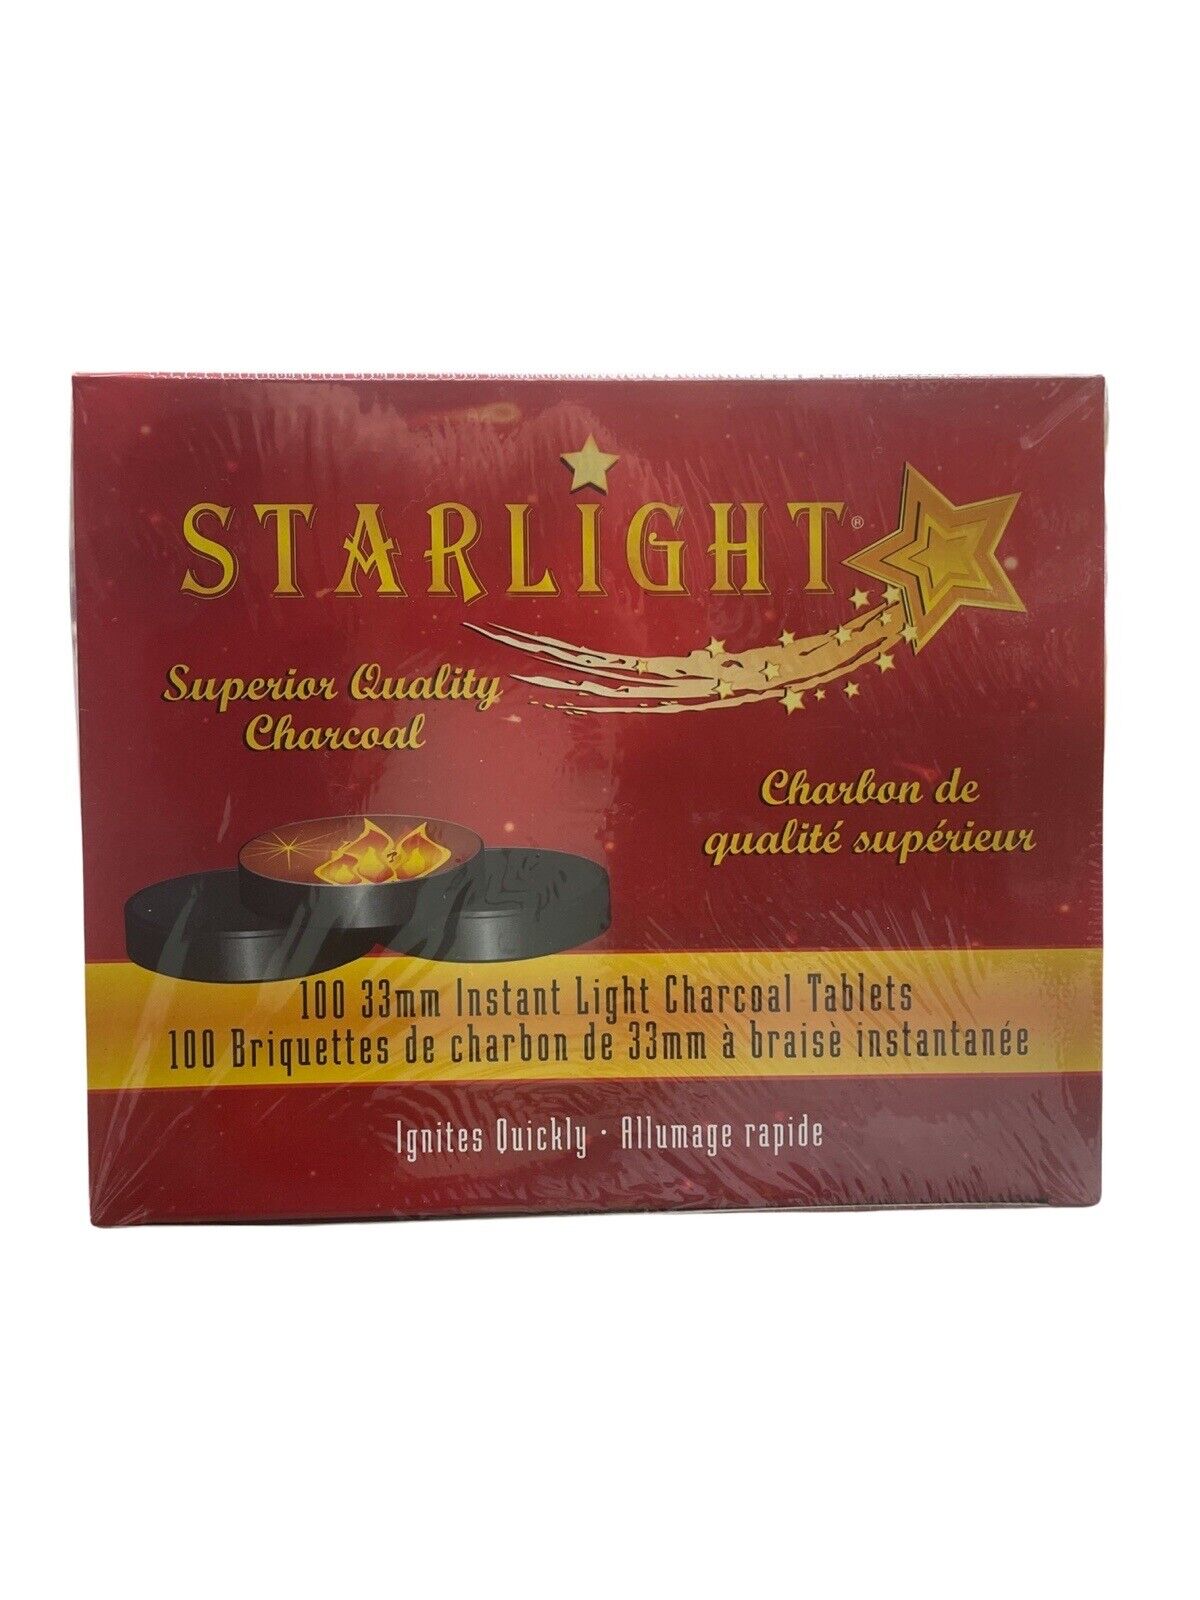 STARLIGHT Charcoal 33mm Instant Light Charcoal , 1 Box, 10 Rolls, 100 Tablets